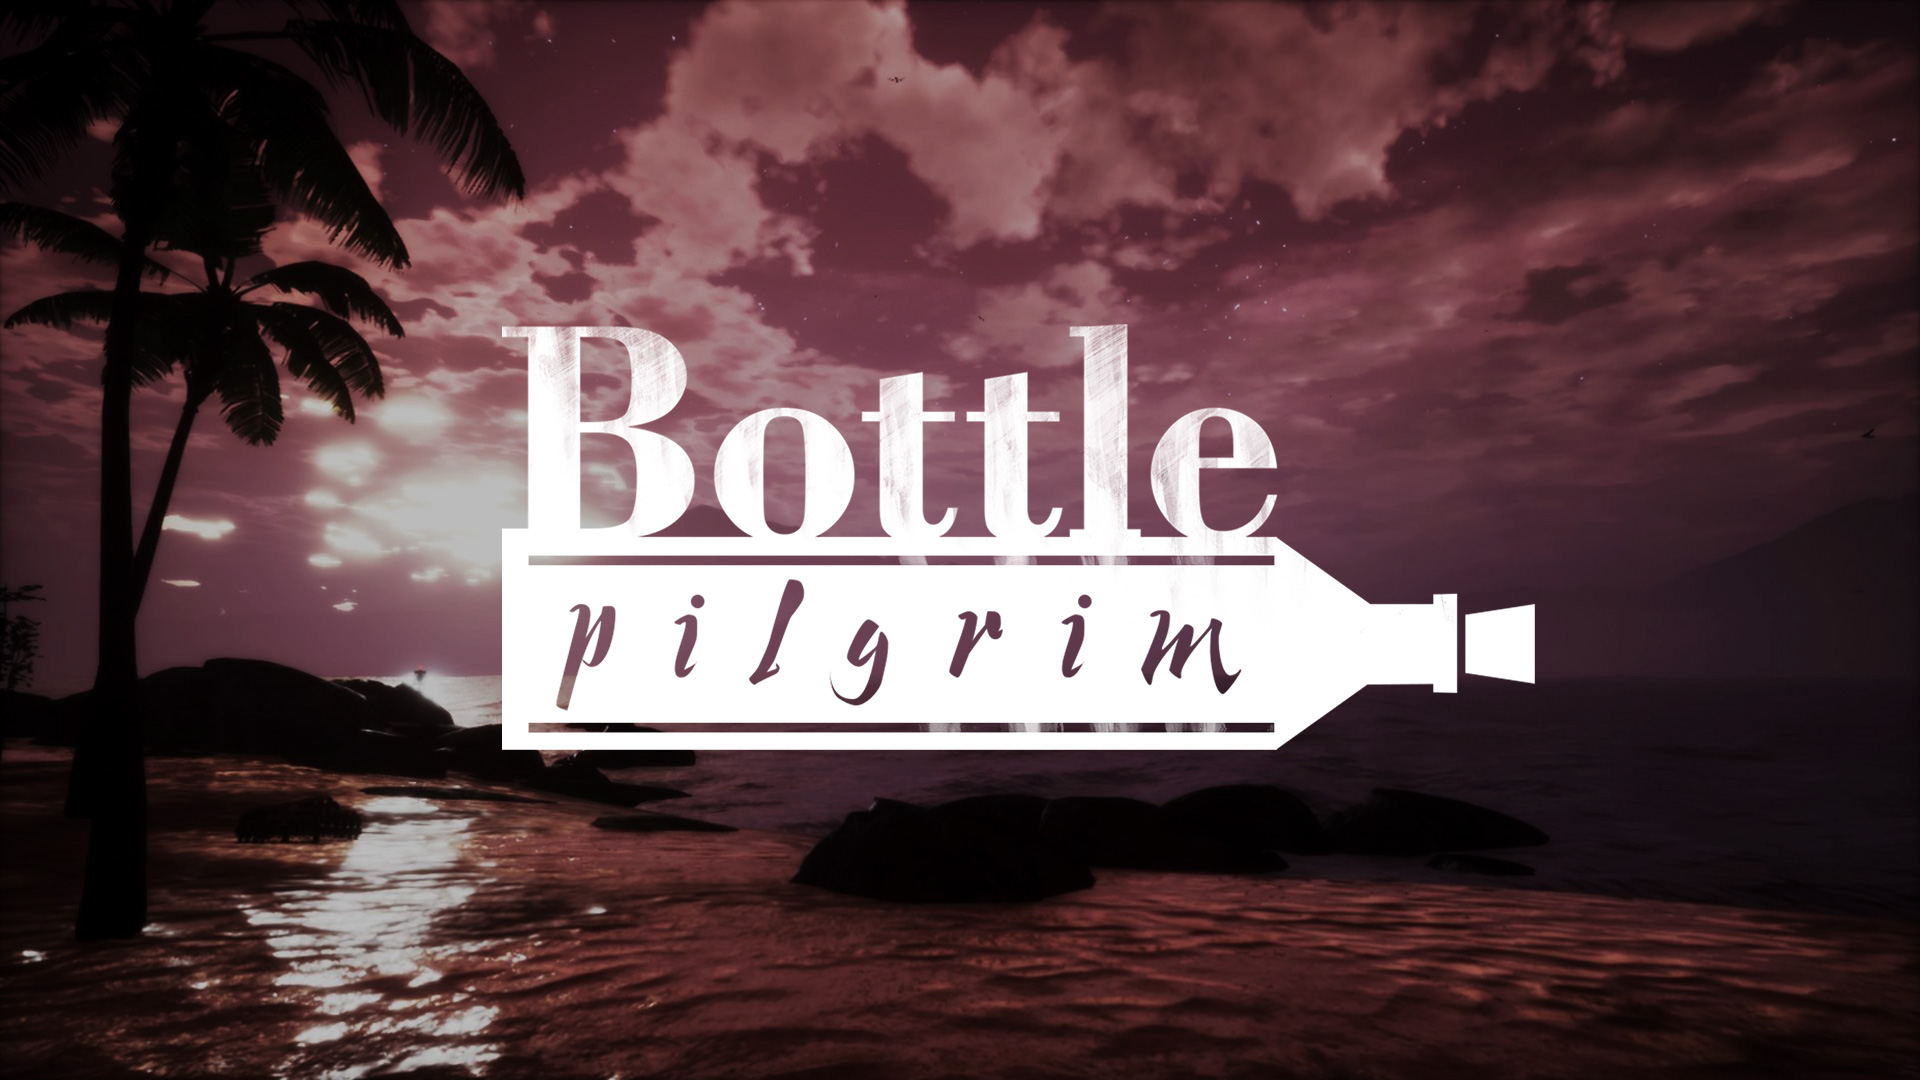 Пилигрим 1 4. Ботл Пилигрим. Bottle: Pilgrim Redux. Pilgrims game. Thirty Flights of loving.